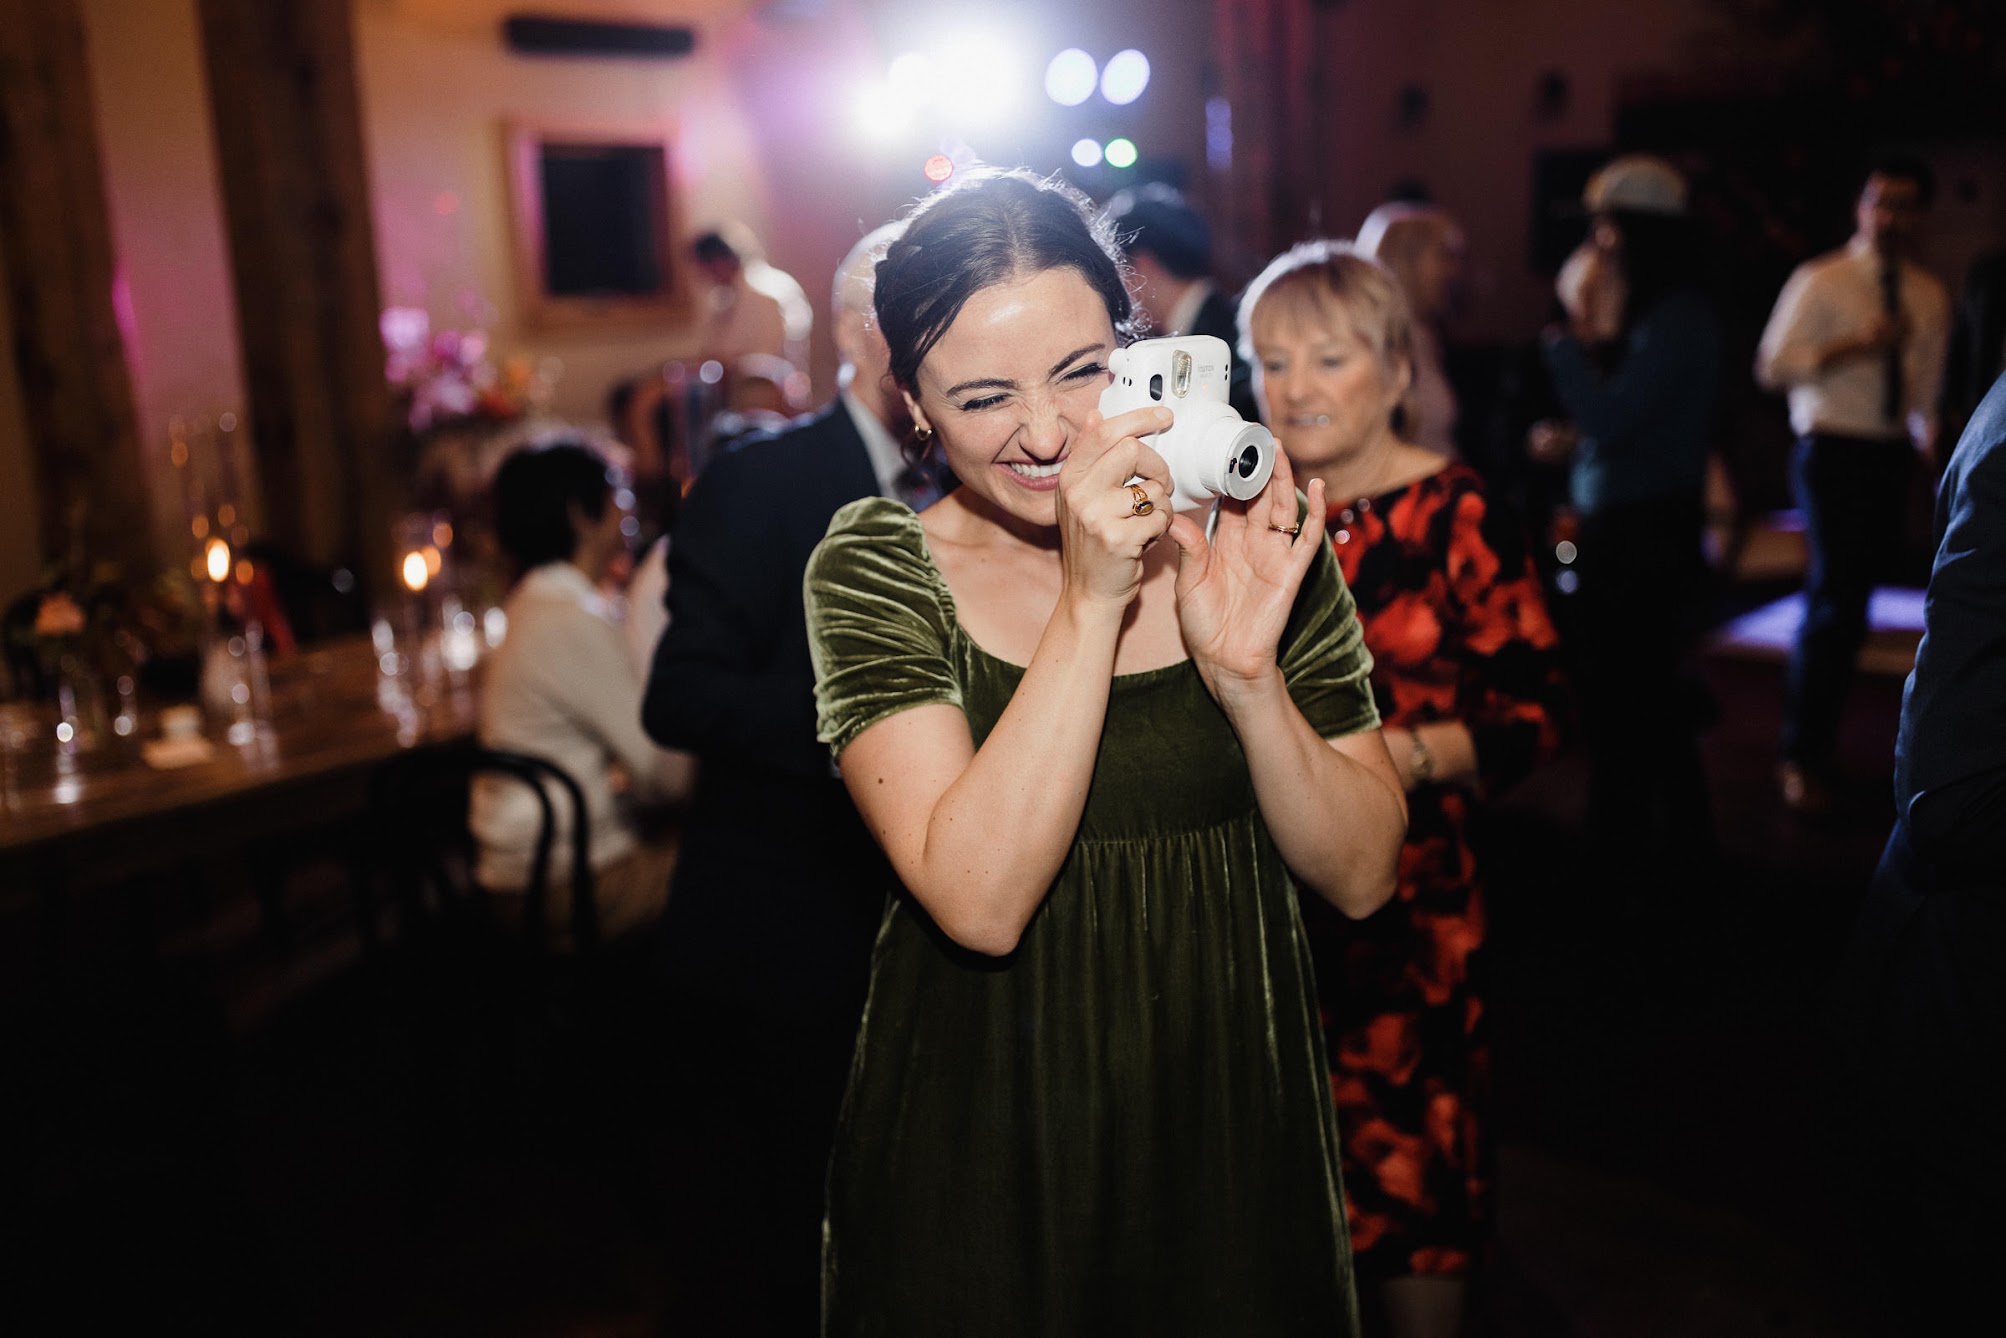 bridesmaid holding a polaroid camera, taking a photo the bride